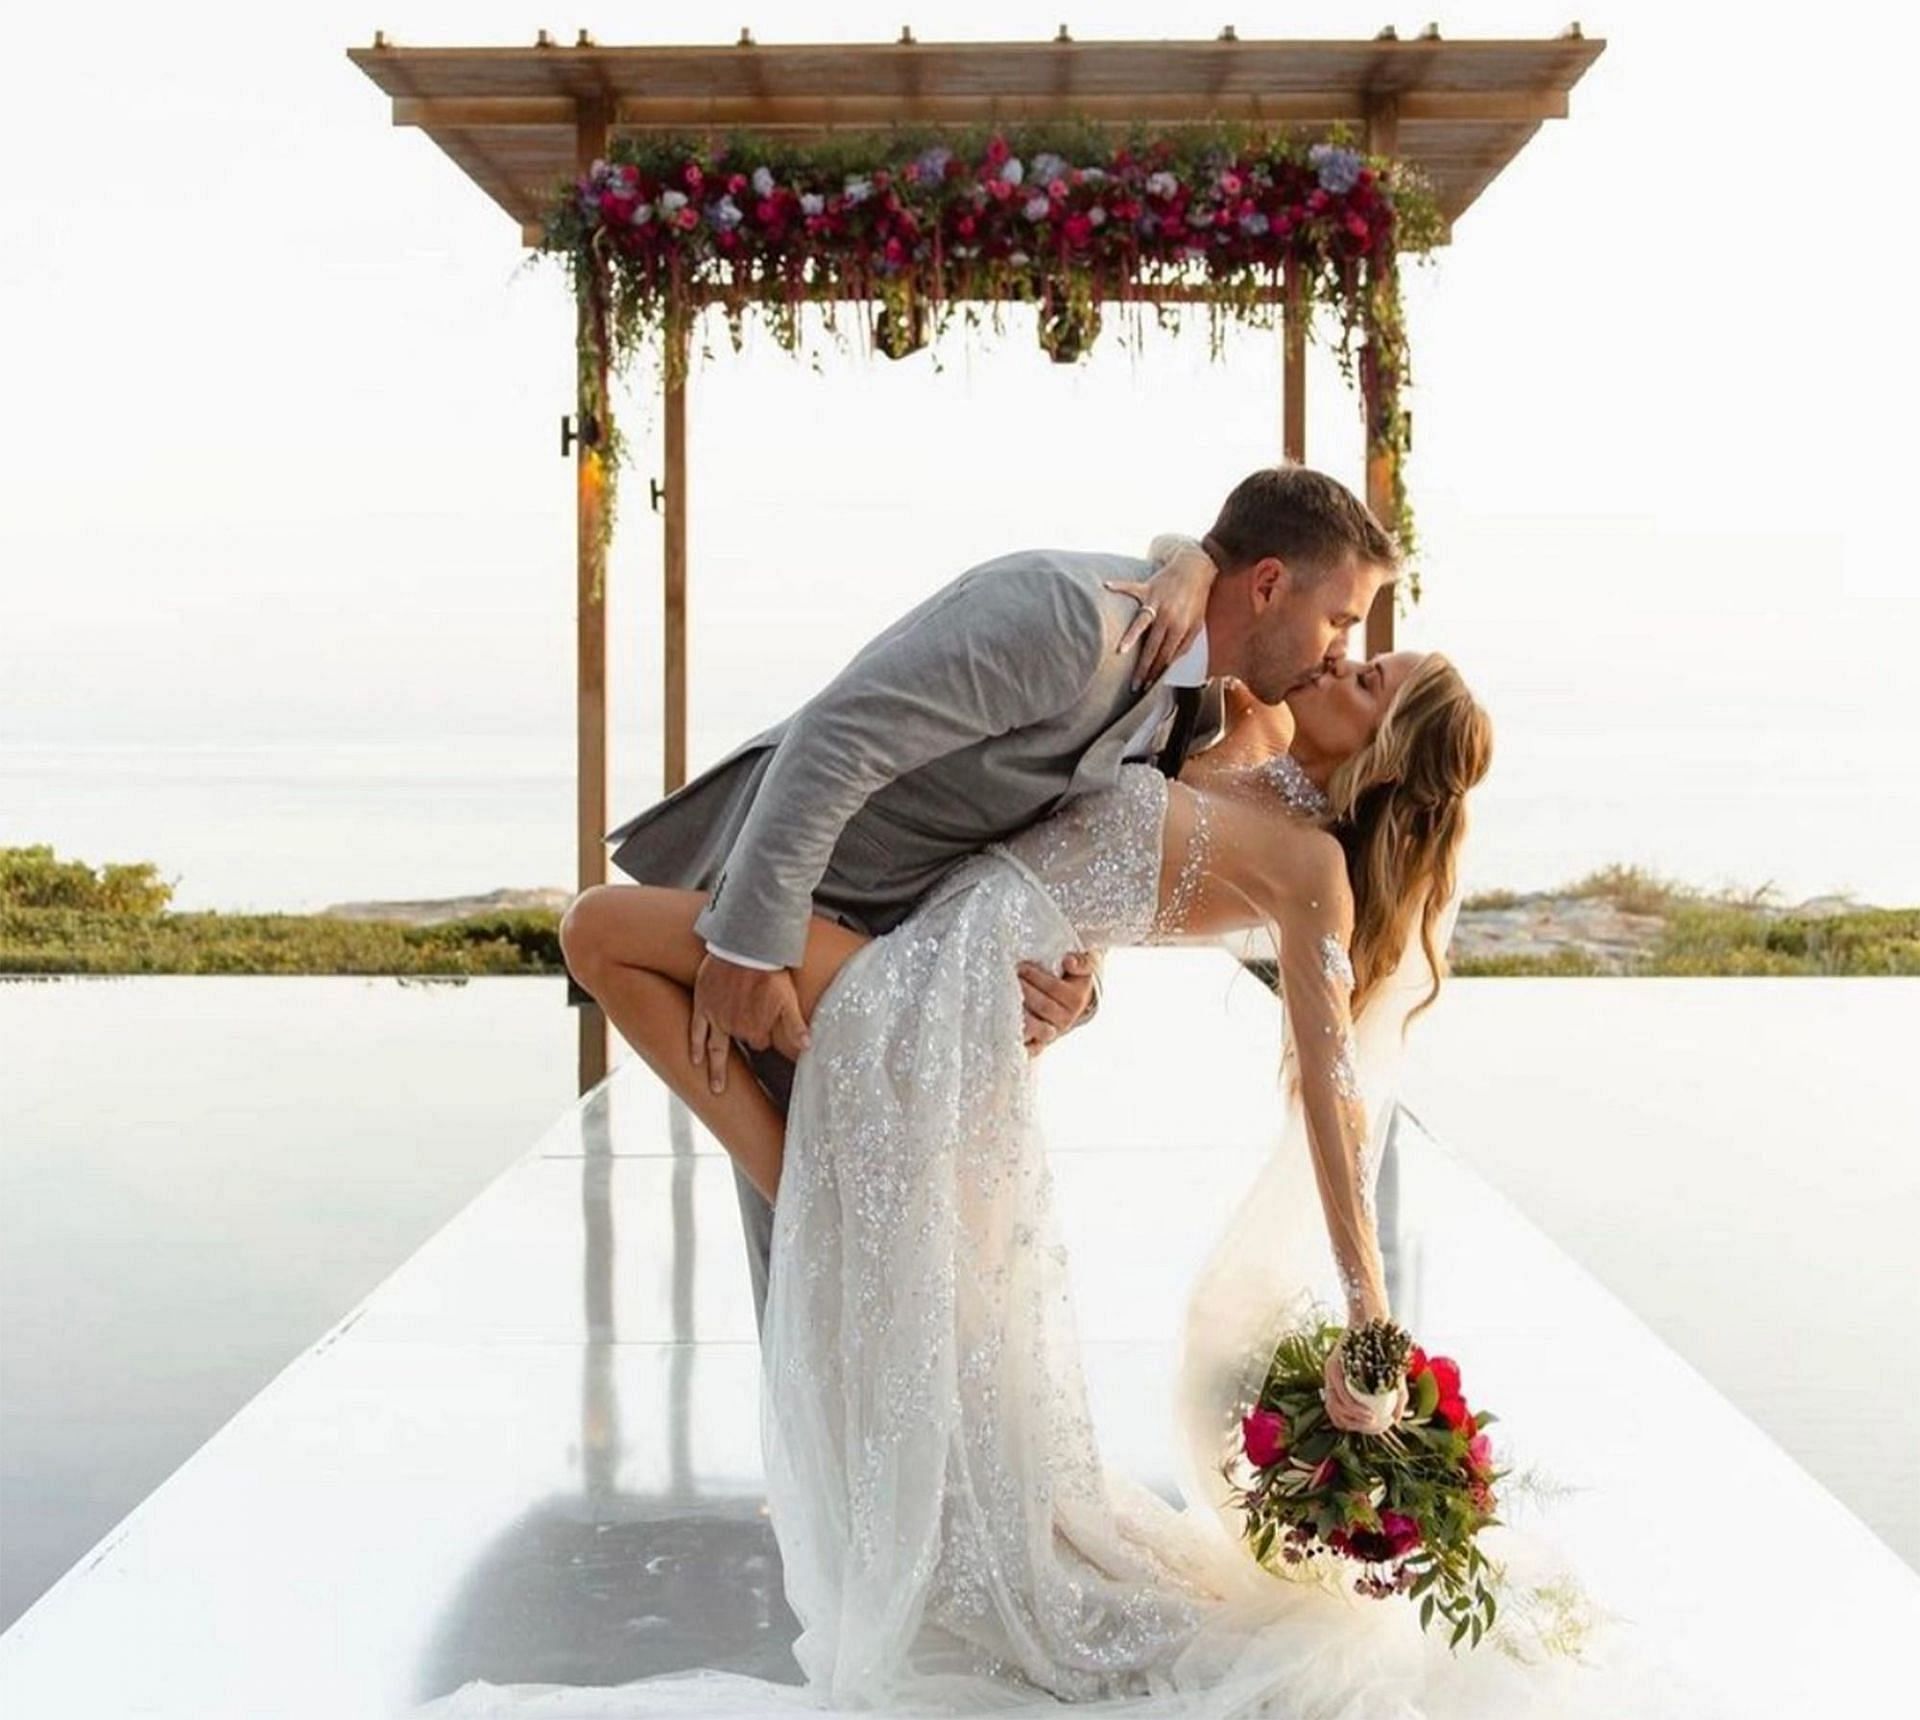 Brooks Koepka and Jena Sims got married in June 2022 (Image via Instagram.com/Brooks Koepka)